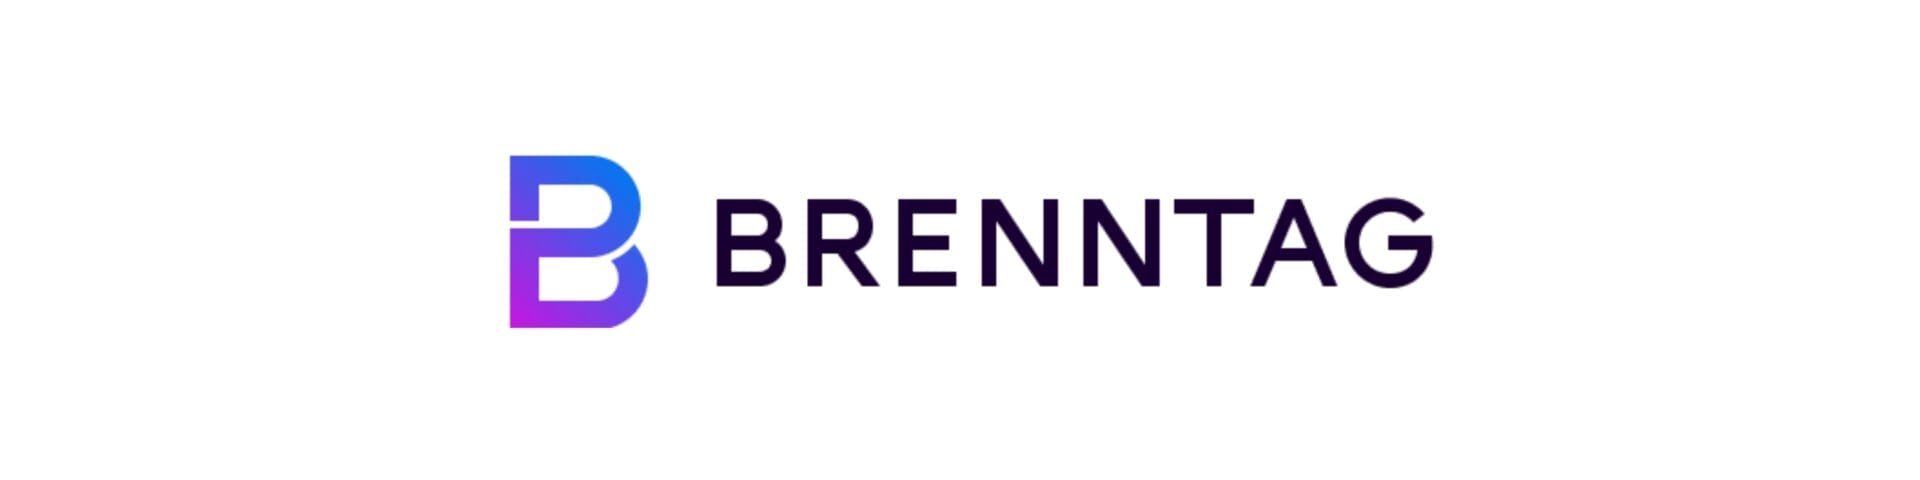 Euro Cosmetics Magazine - Brenntag Logo